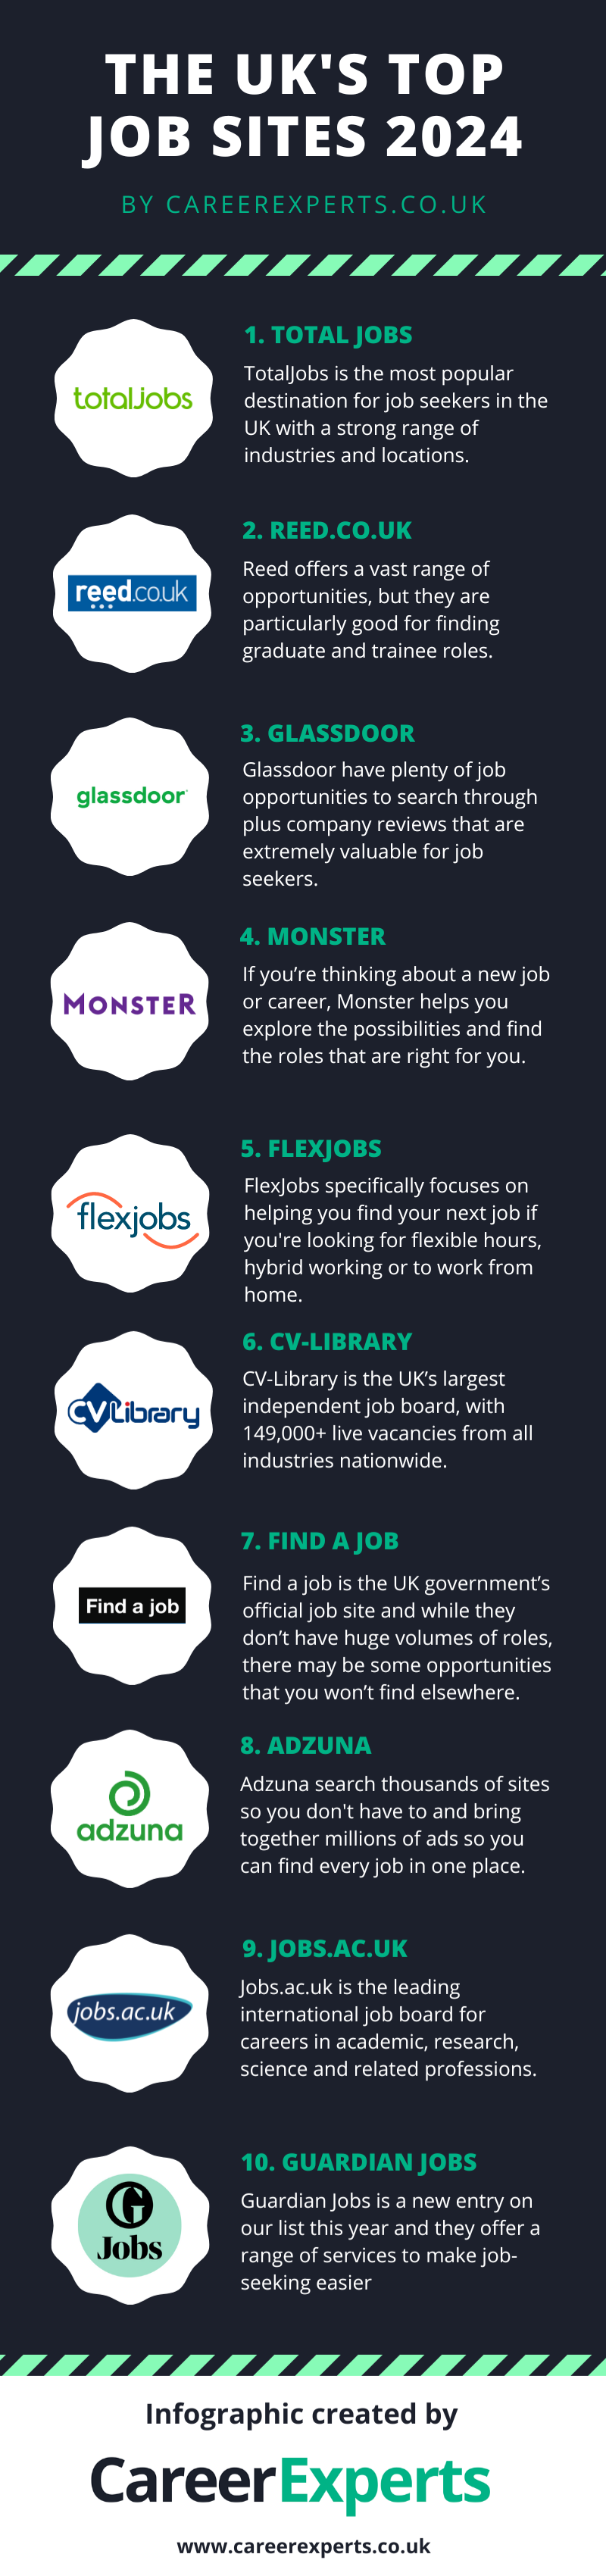 The UK's Top Job Sites 2024 Infographic